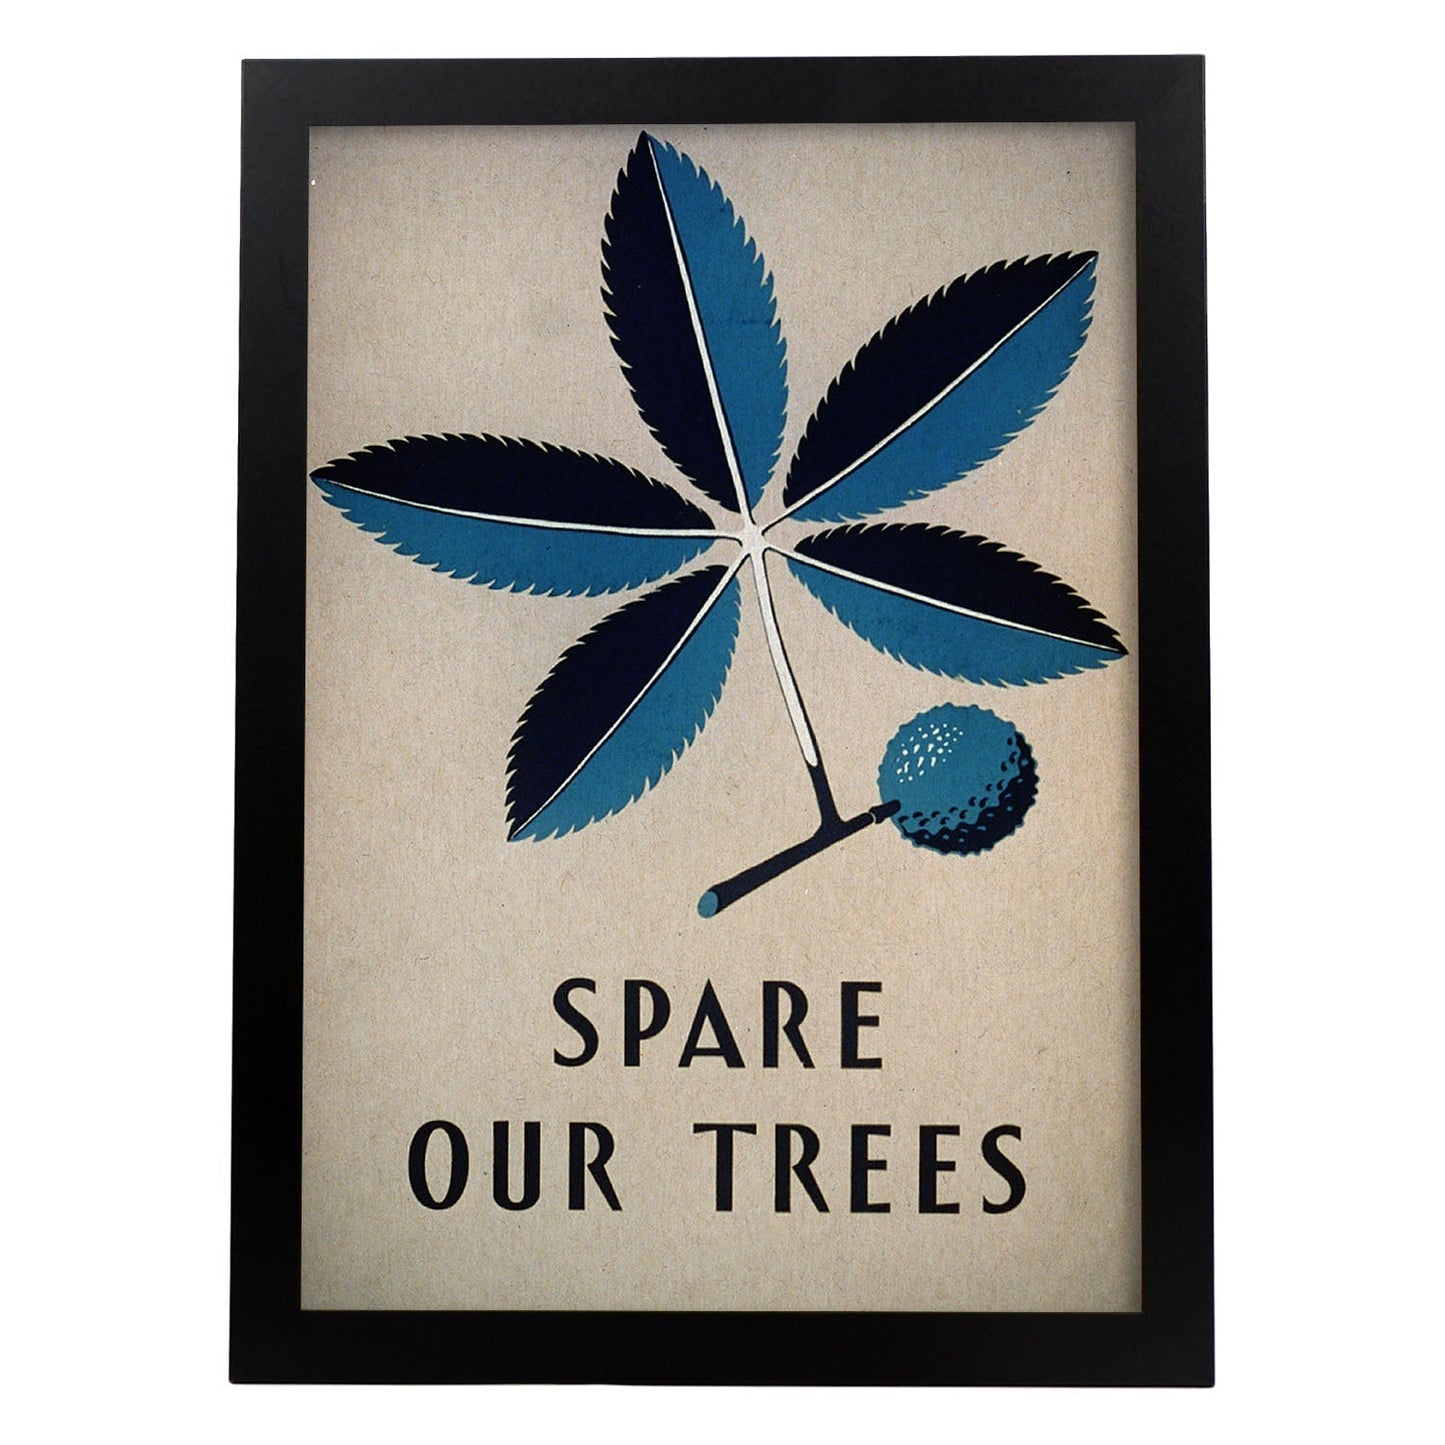 Poster vintage. Cartel vintage Spare our trees Ohio de 1938.-Artwork-Nacnic-A4-Marco Negro-Nacnic Estudio SL